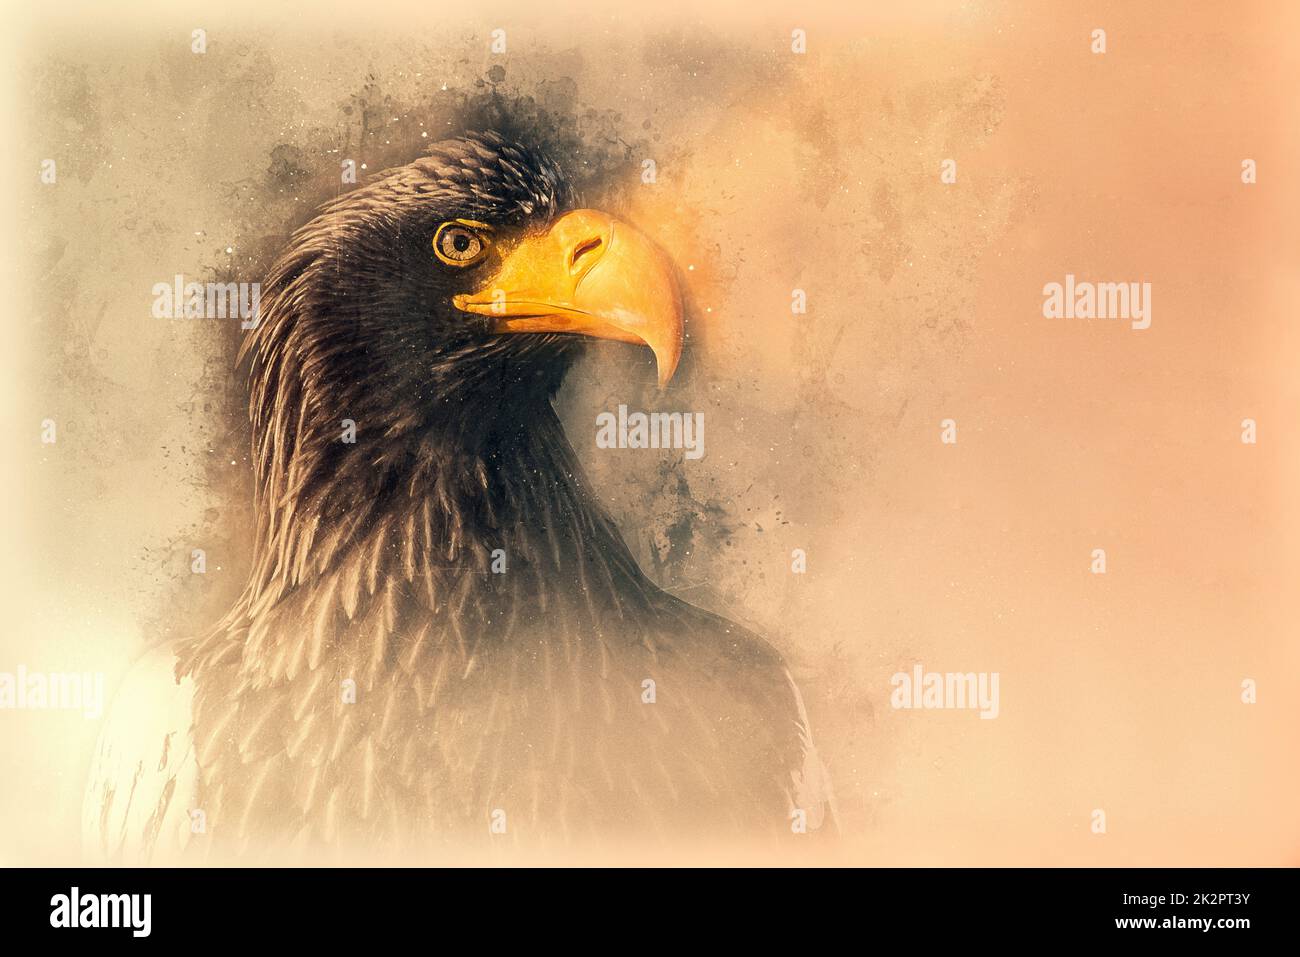 Steller's sea eagle sketch. Digital illustration Stock Photo